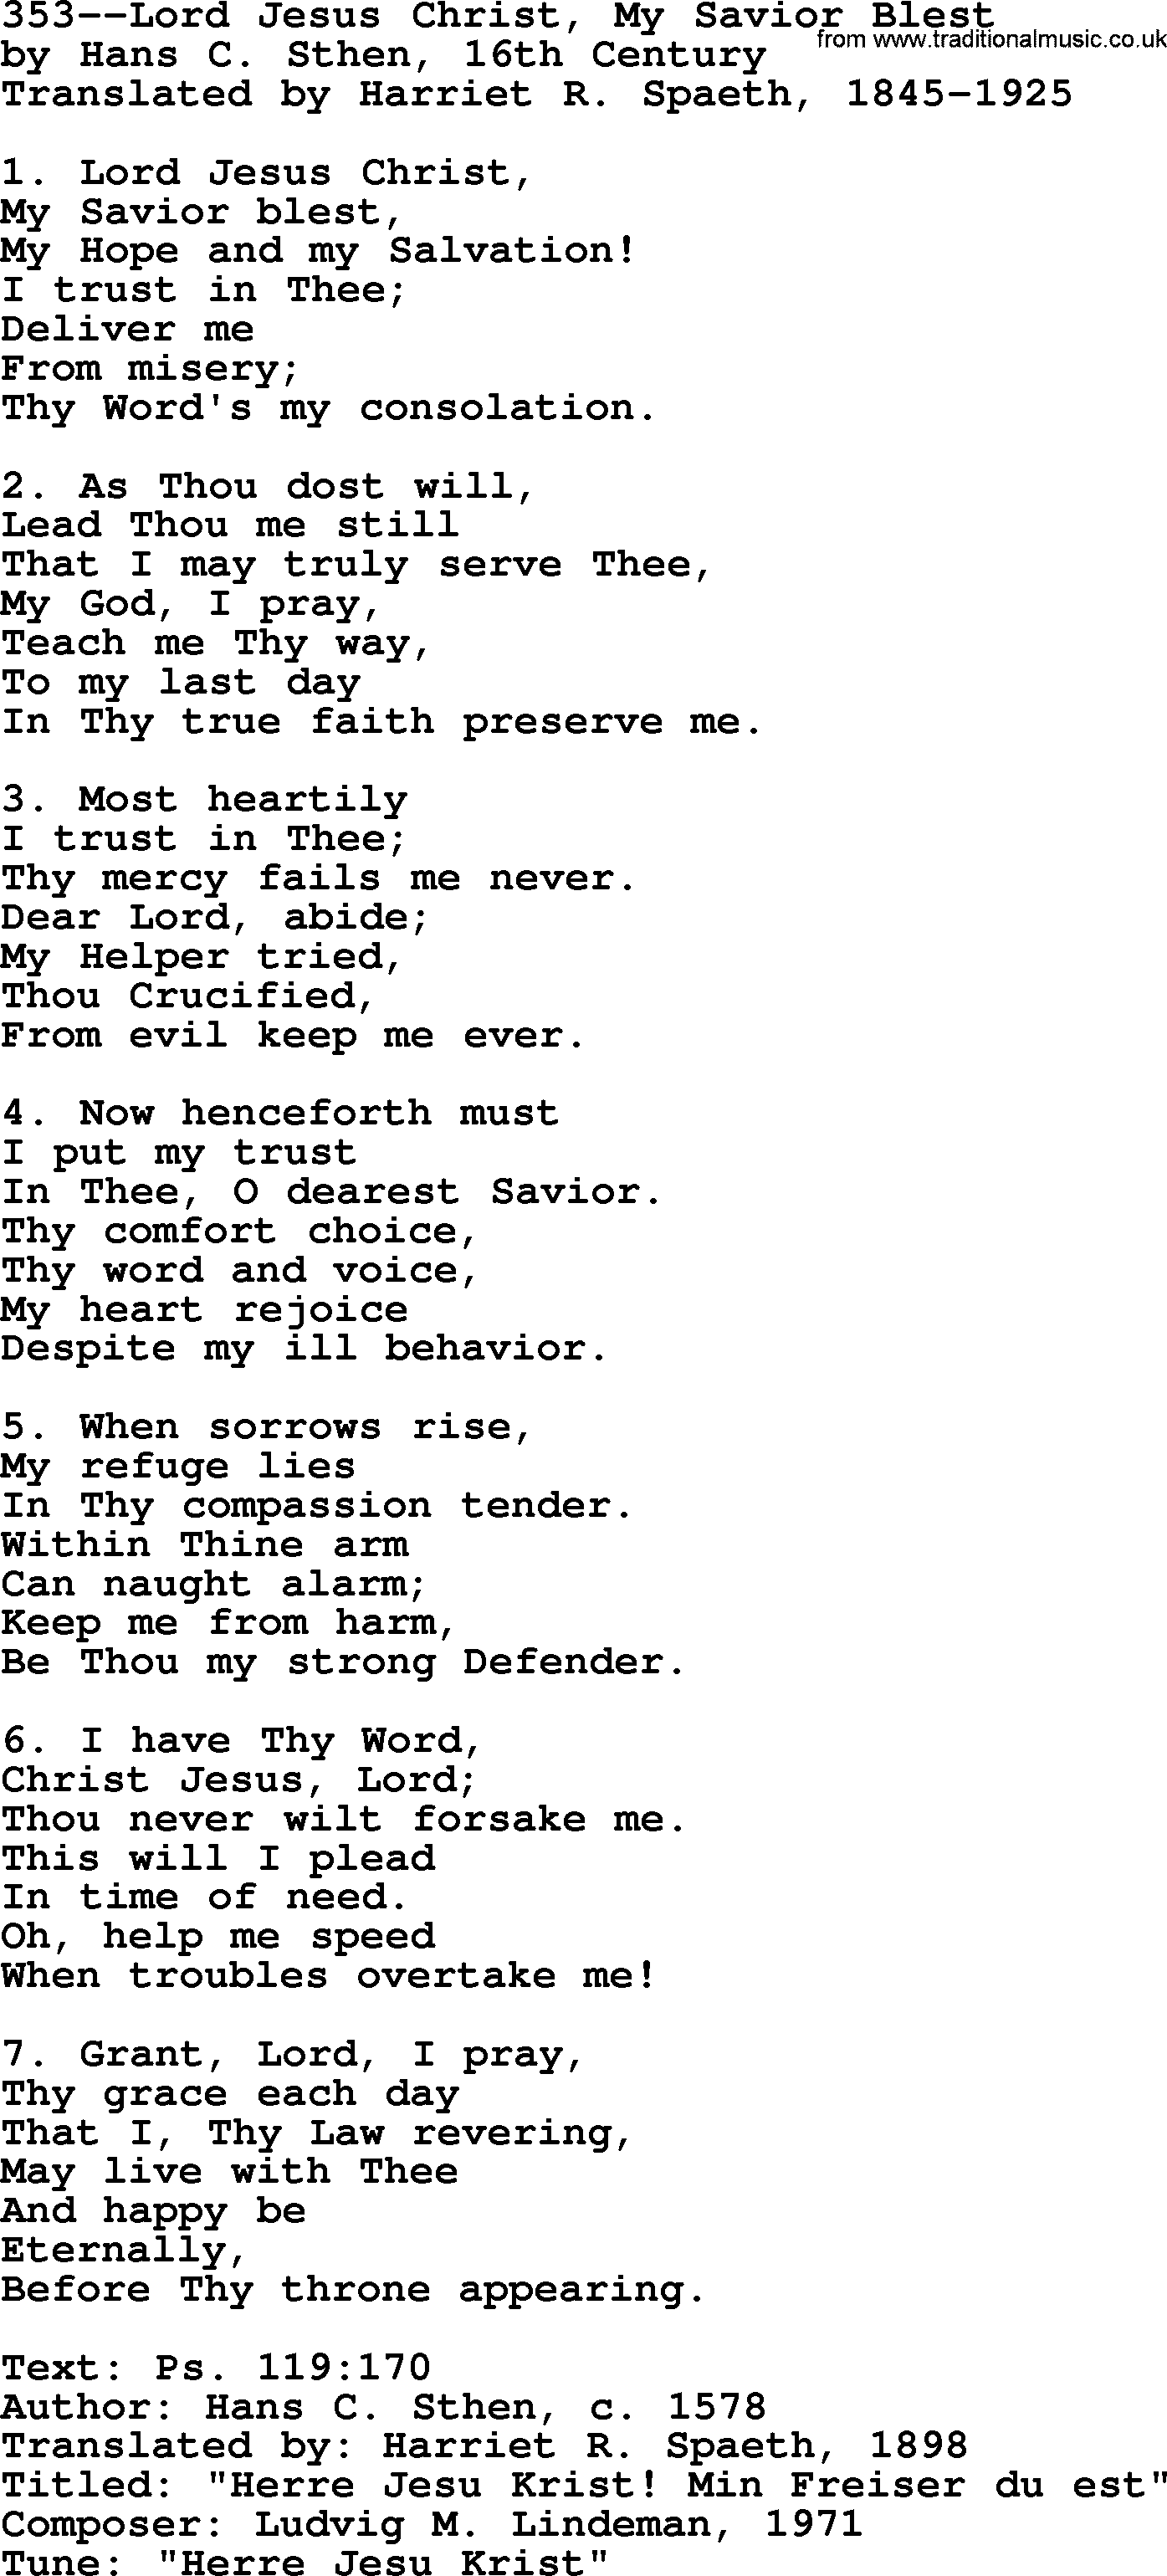 Lutheran Hymn: 353--Lord Jesus Christ, My Savior Blest.txt lyrics with PDF